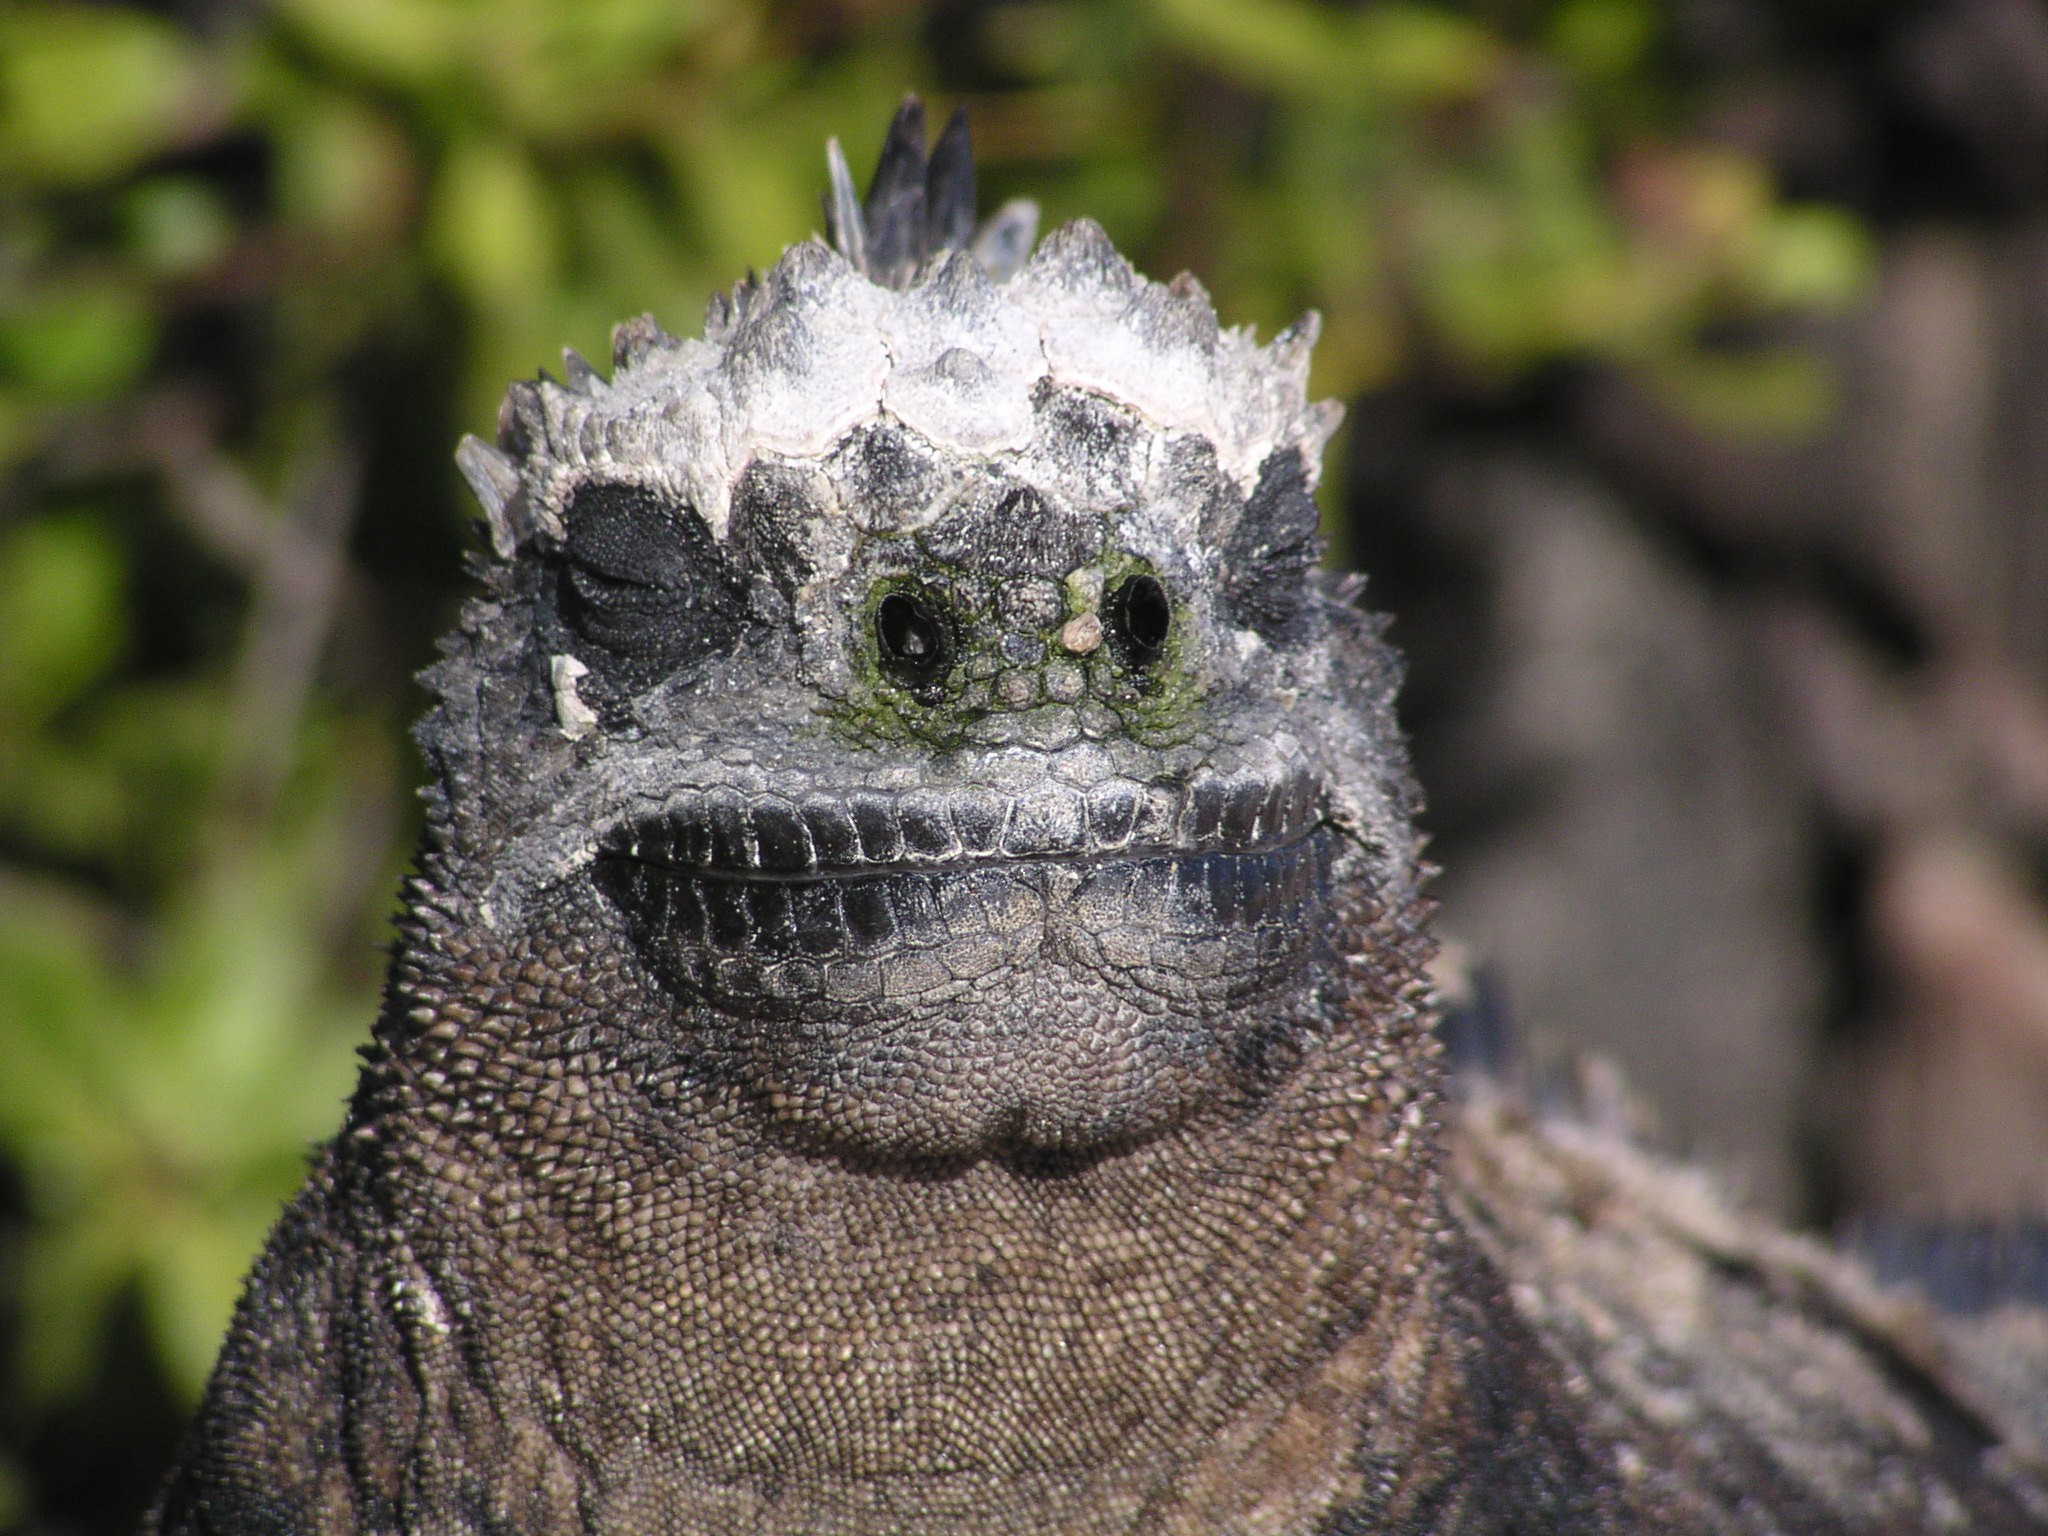 endemic wild reptile - open fotos | free open source photos, public ...